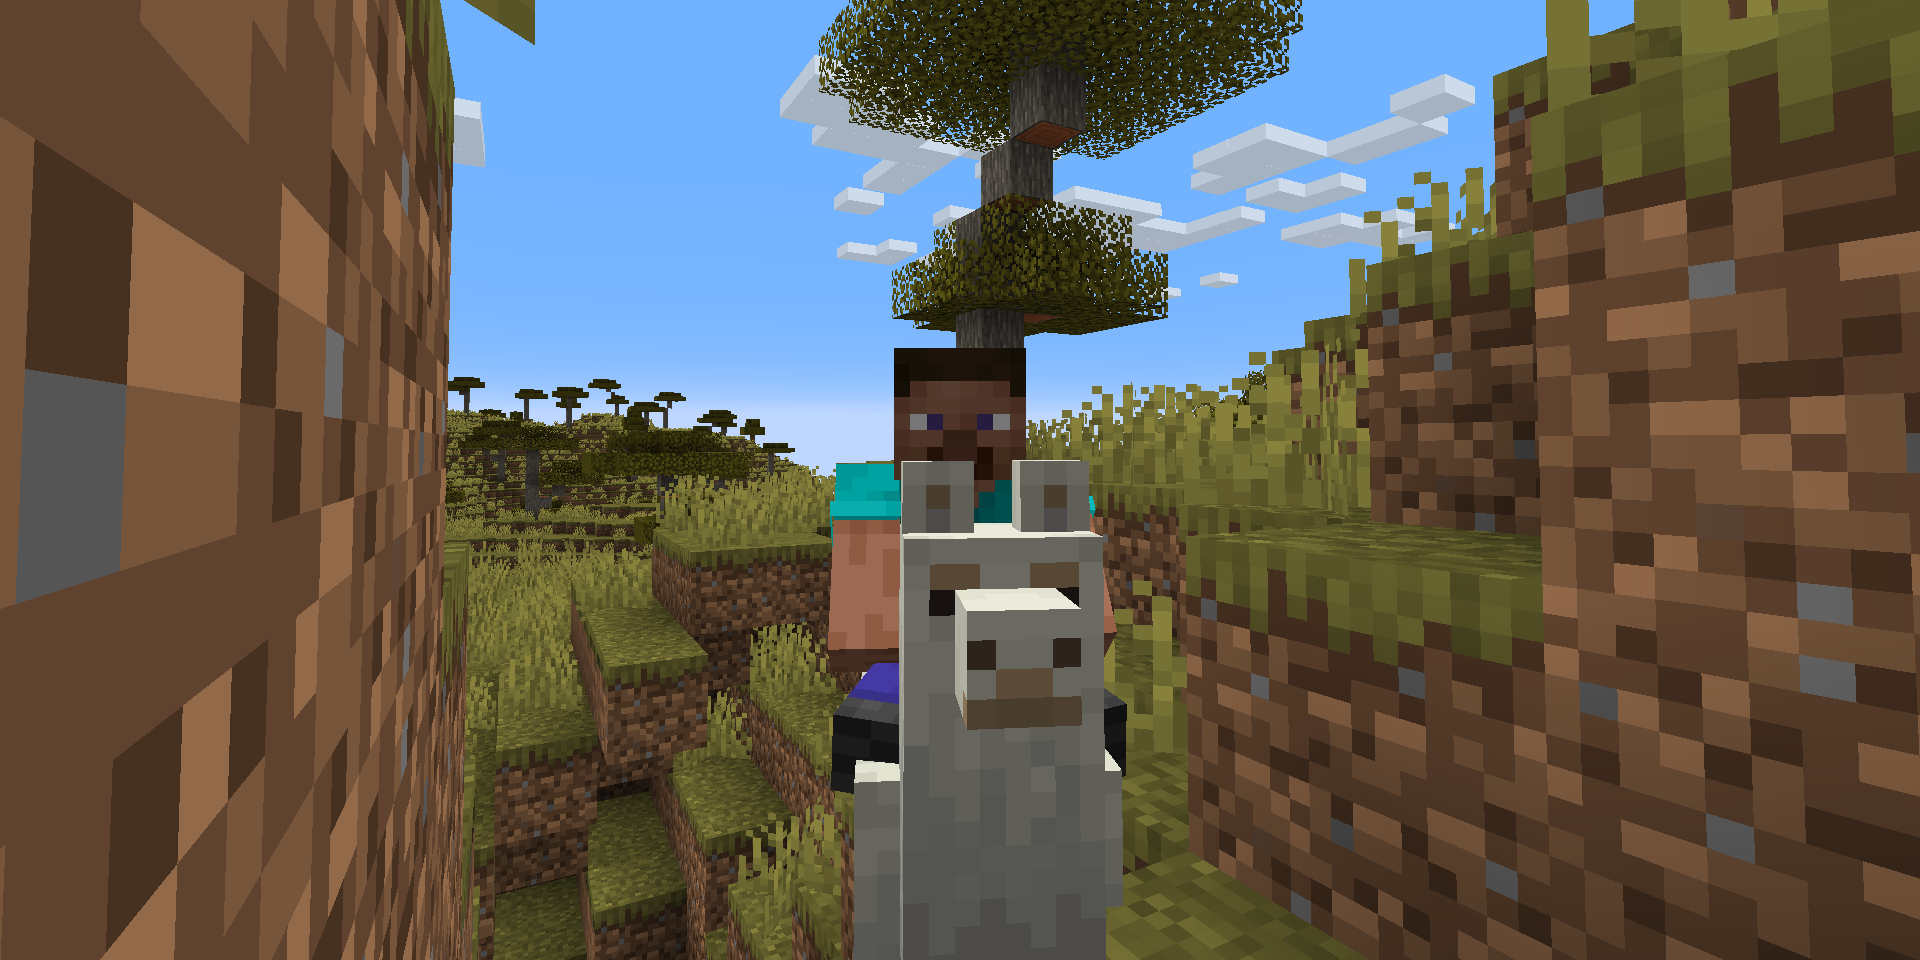 Steve riding a llama in a Savanna in Minecraft